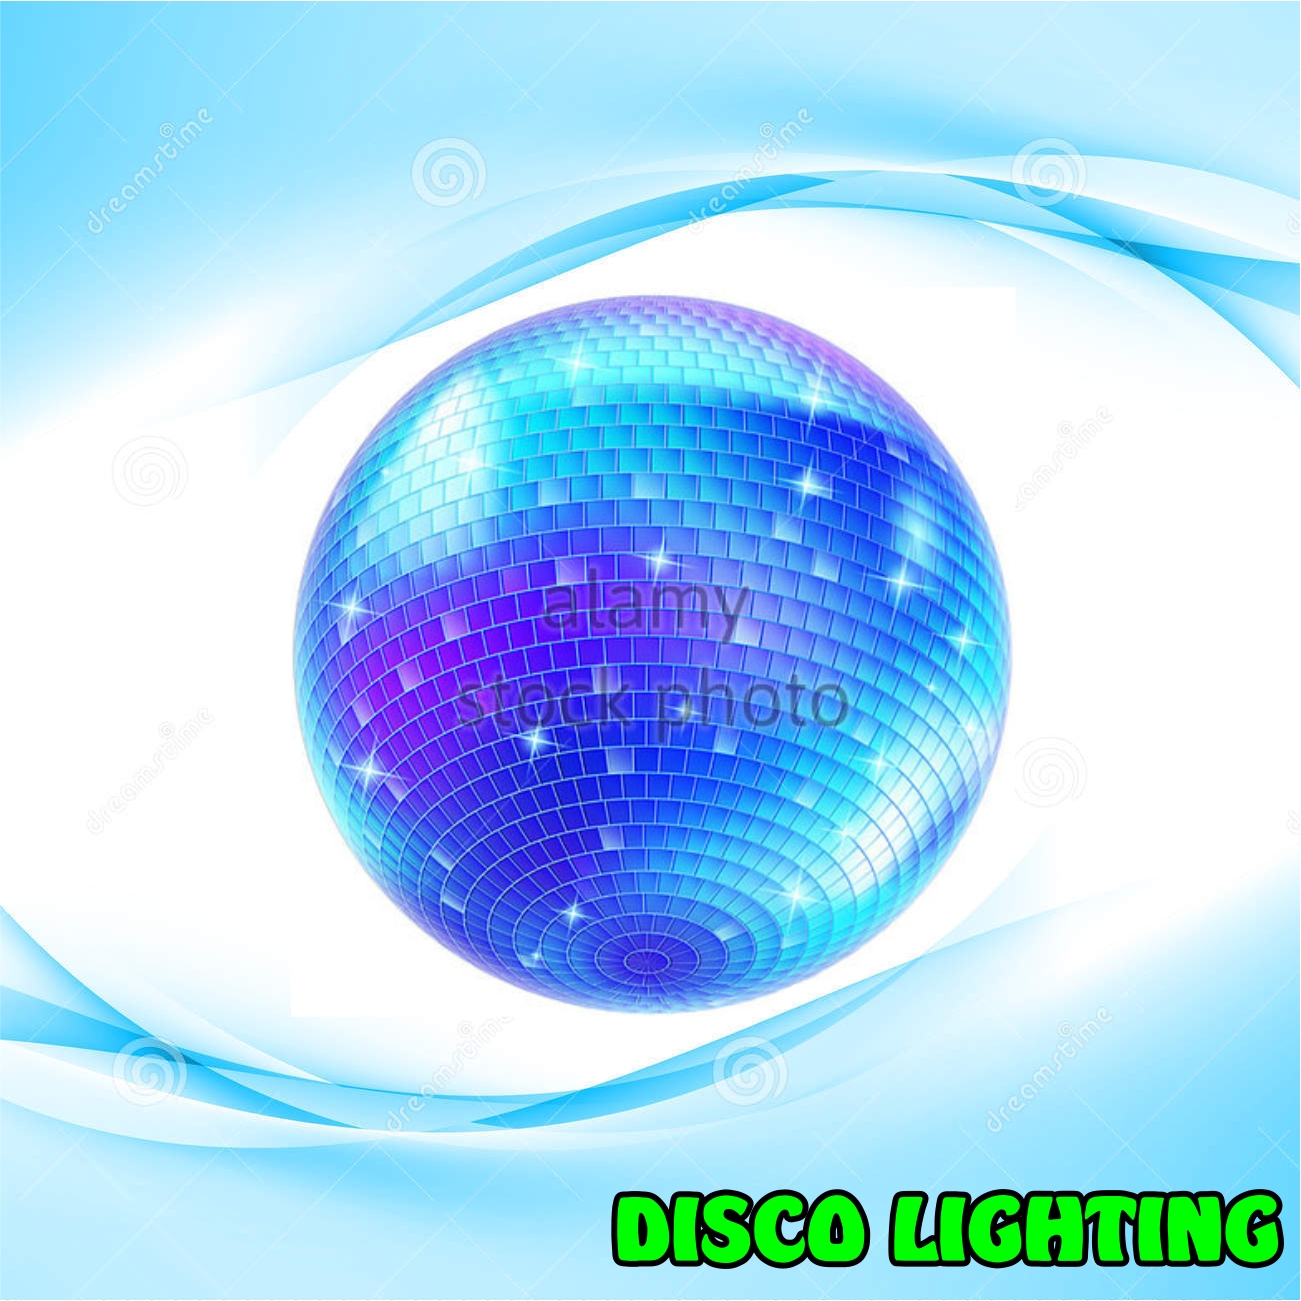 CLICK ME  DISCO LIGHTING LED LAZER LASER DJ LIGHTS GRAVITY DURBAN 0315072463 DISCO LIGHTING FOR SALE AT GRAVITY SOUND AND LIGHTING WAREHOUSE DURBAN 0315072736